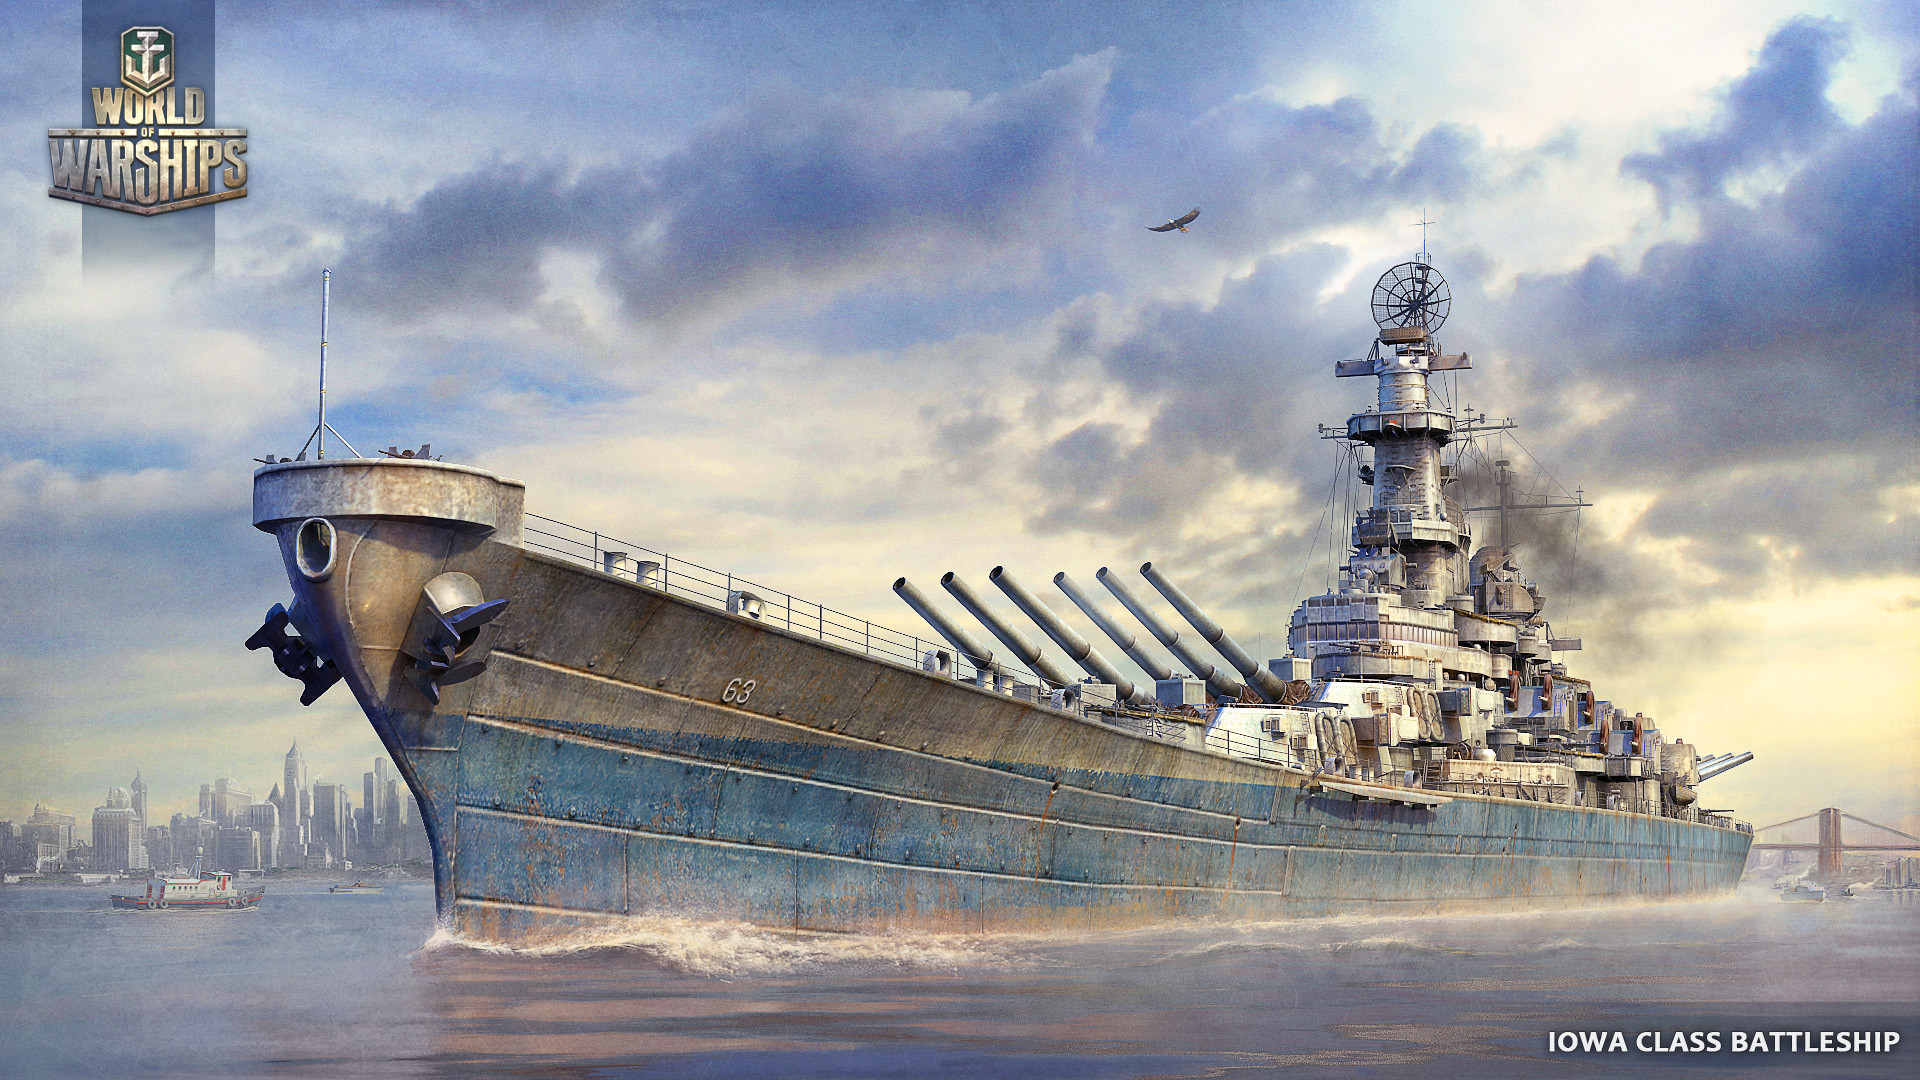 1920x1080 Fond ecran wallpaper World Of Warships JeuxVideofr 